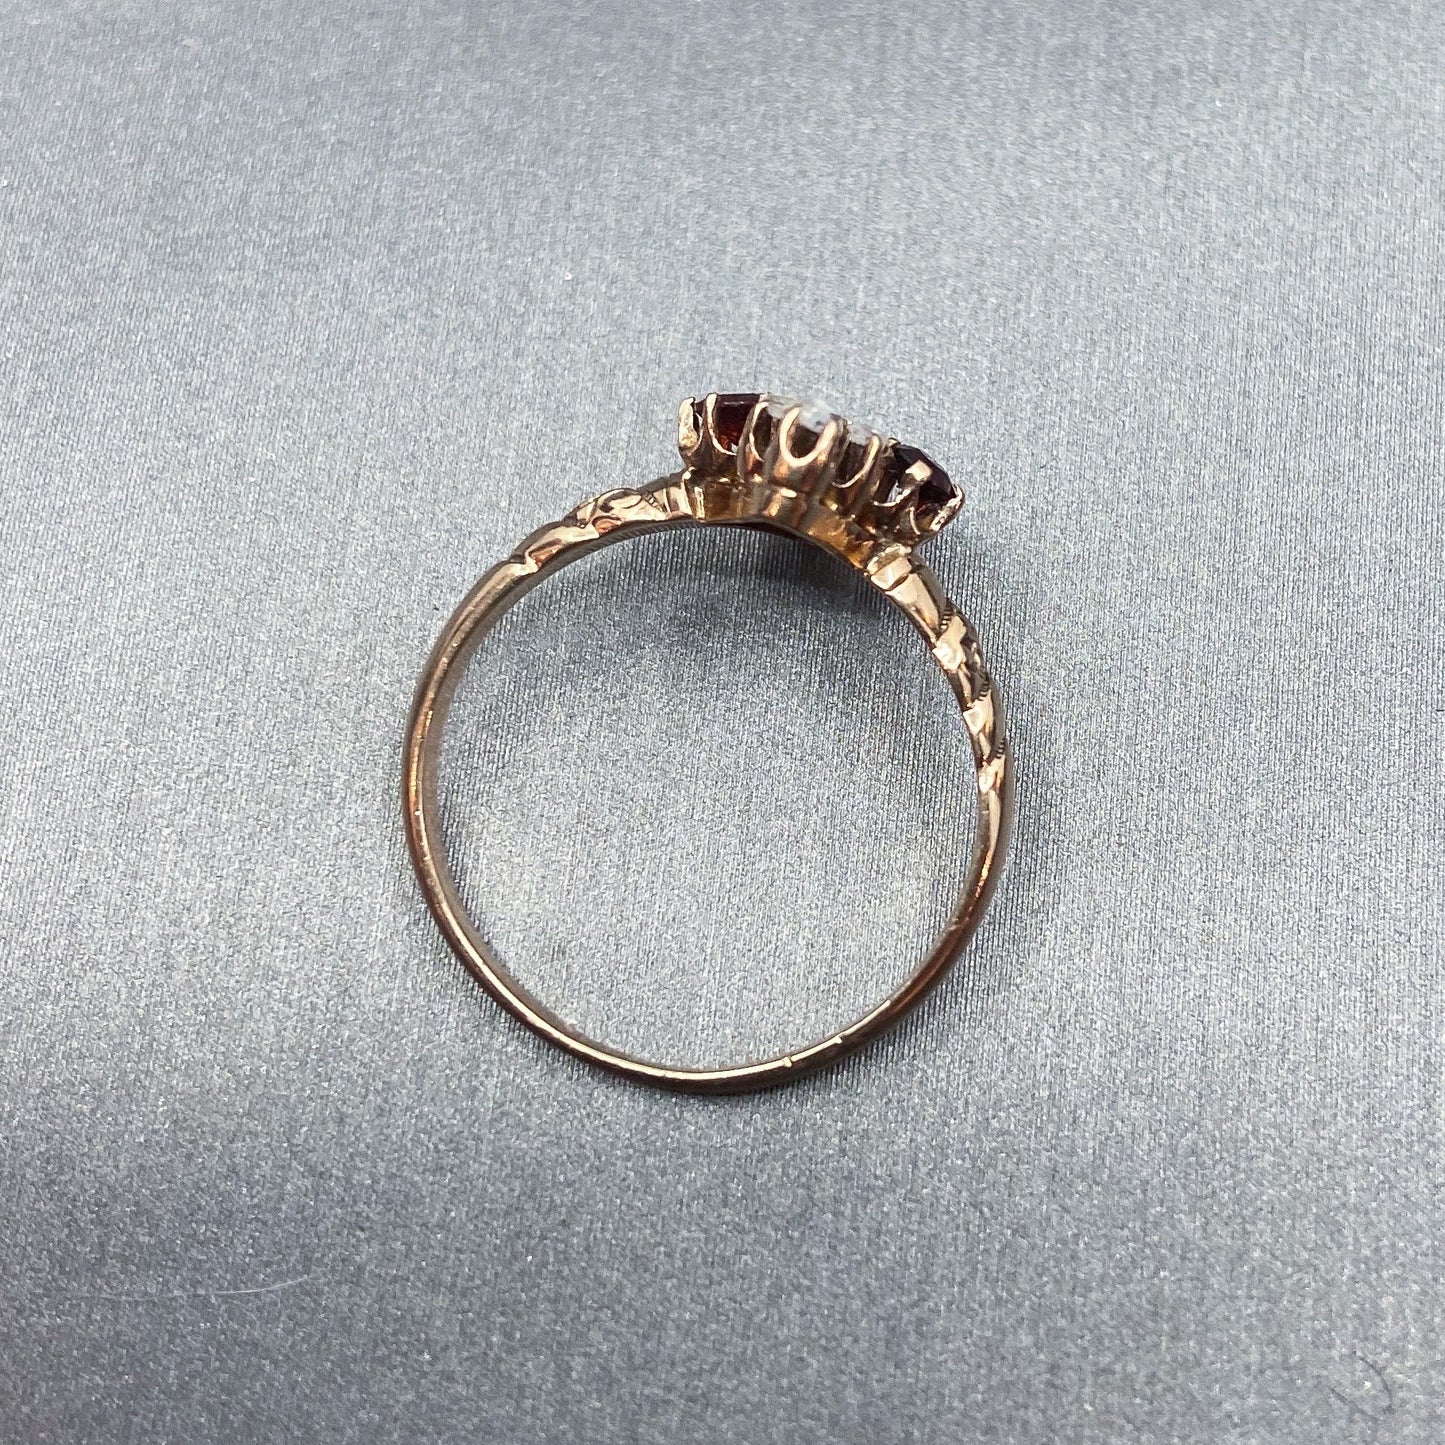 SOLD—Victorian Rose Cut Diamond and Garnet Ring 14k c. 1880